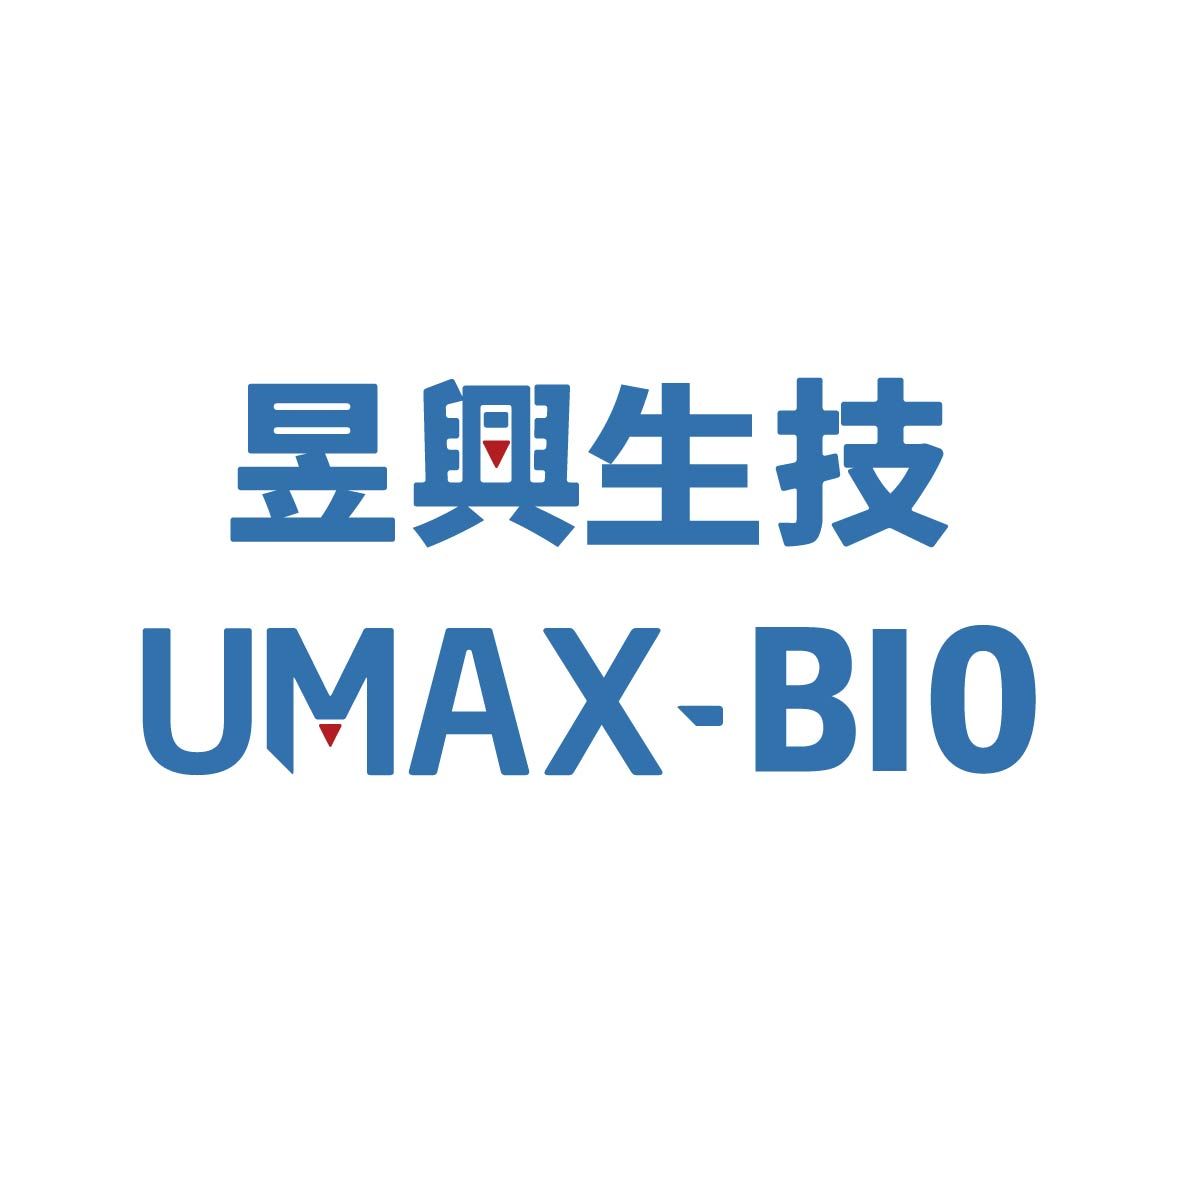 Umax- Biotechnology logo